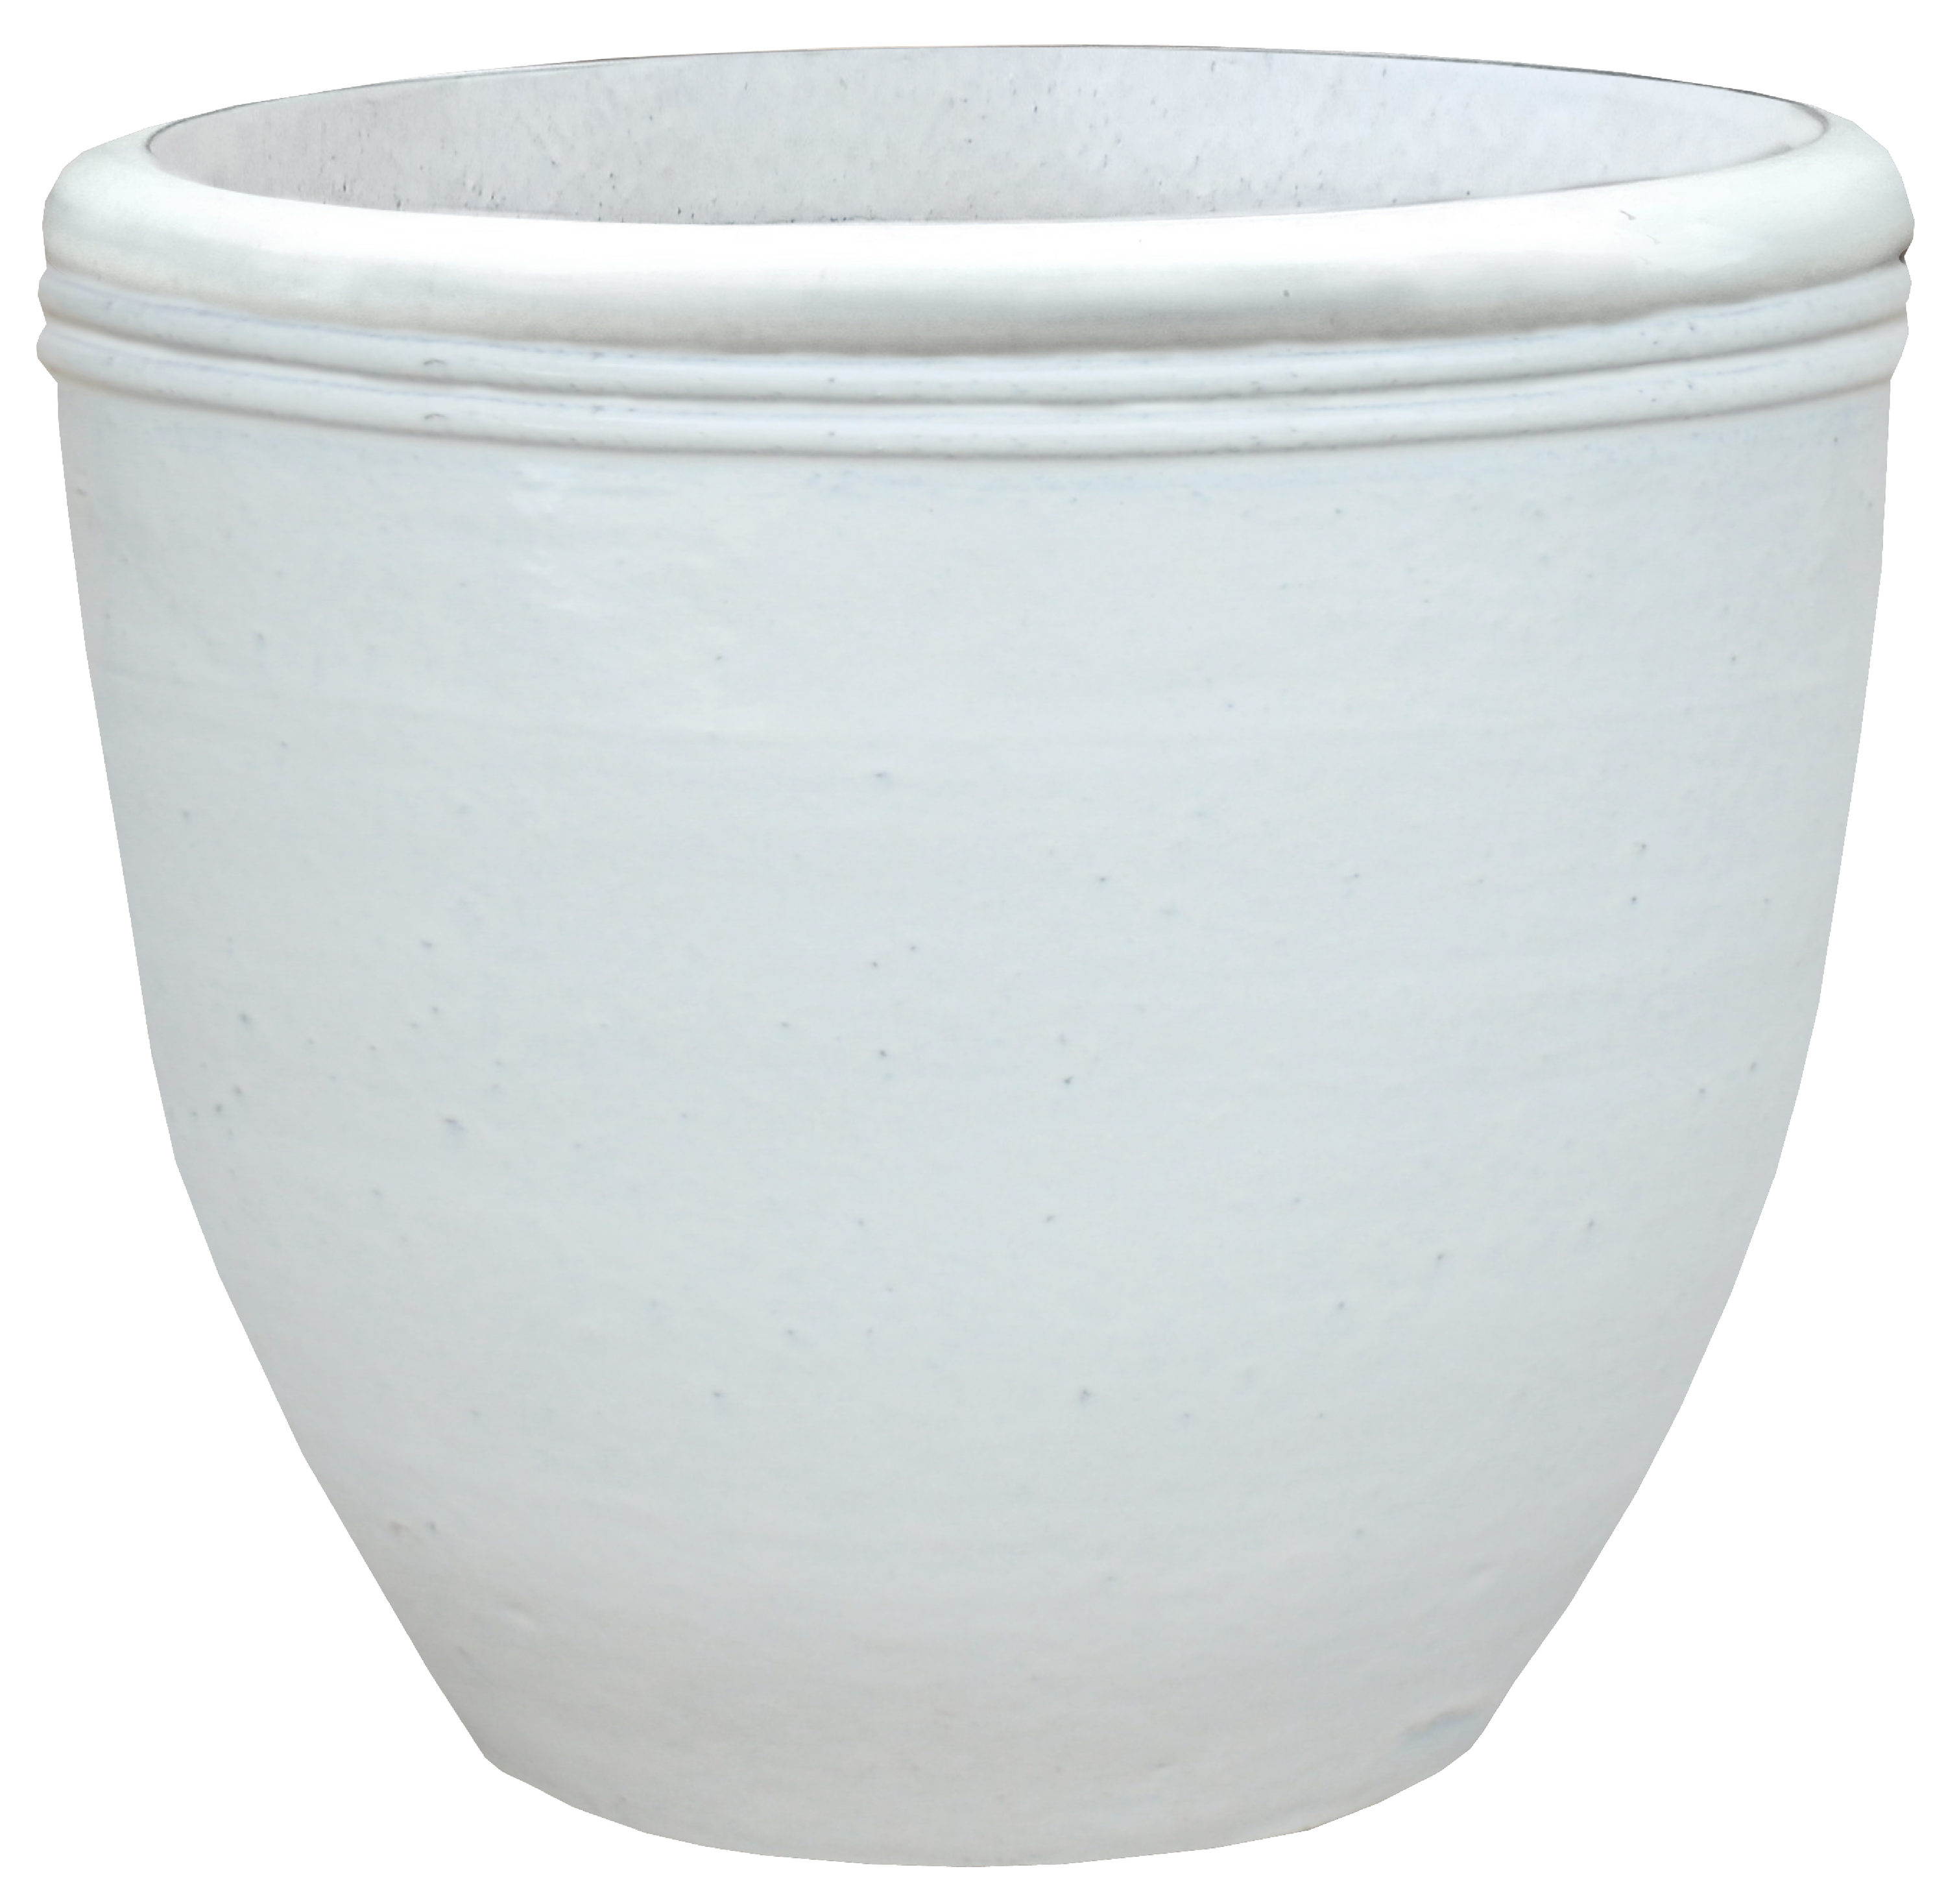 Ceramic planter with drainage